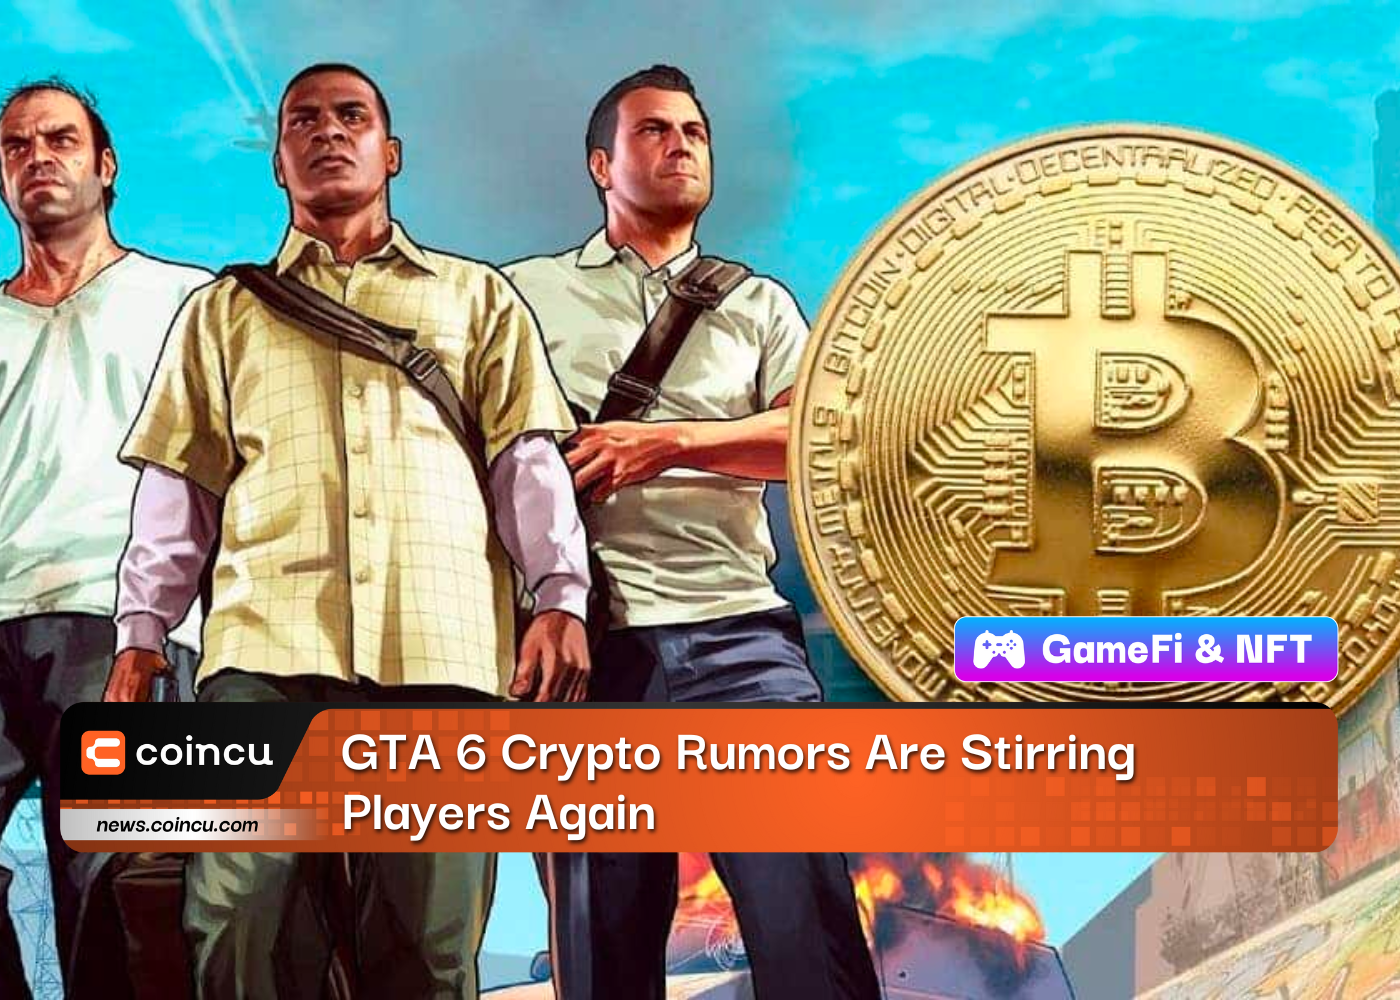 GTA 6 Crypto Rumors Are Stirring Players Again